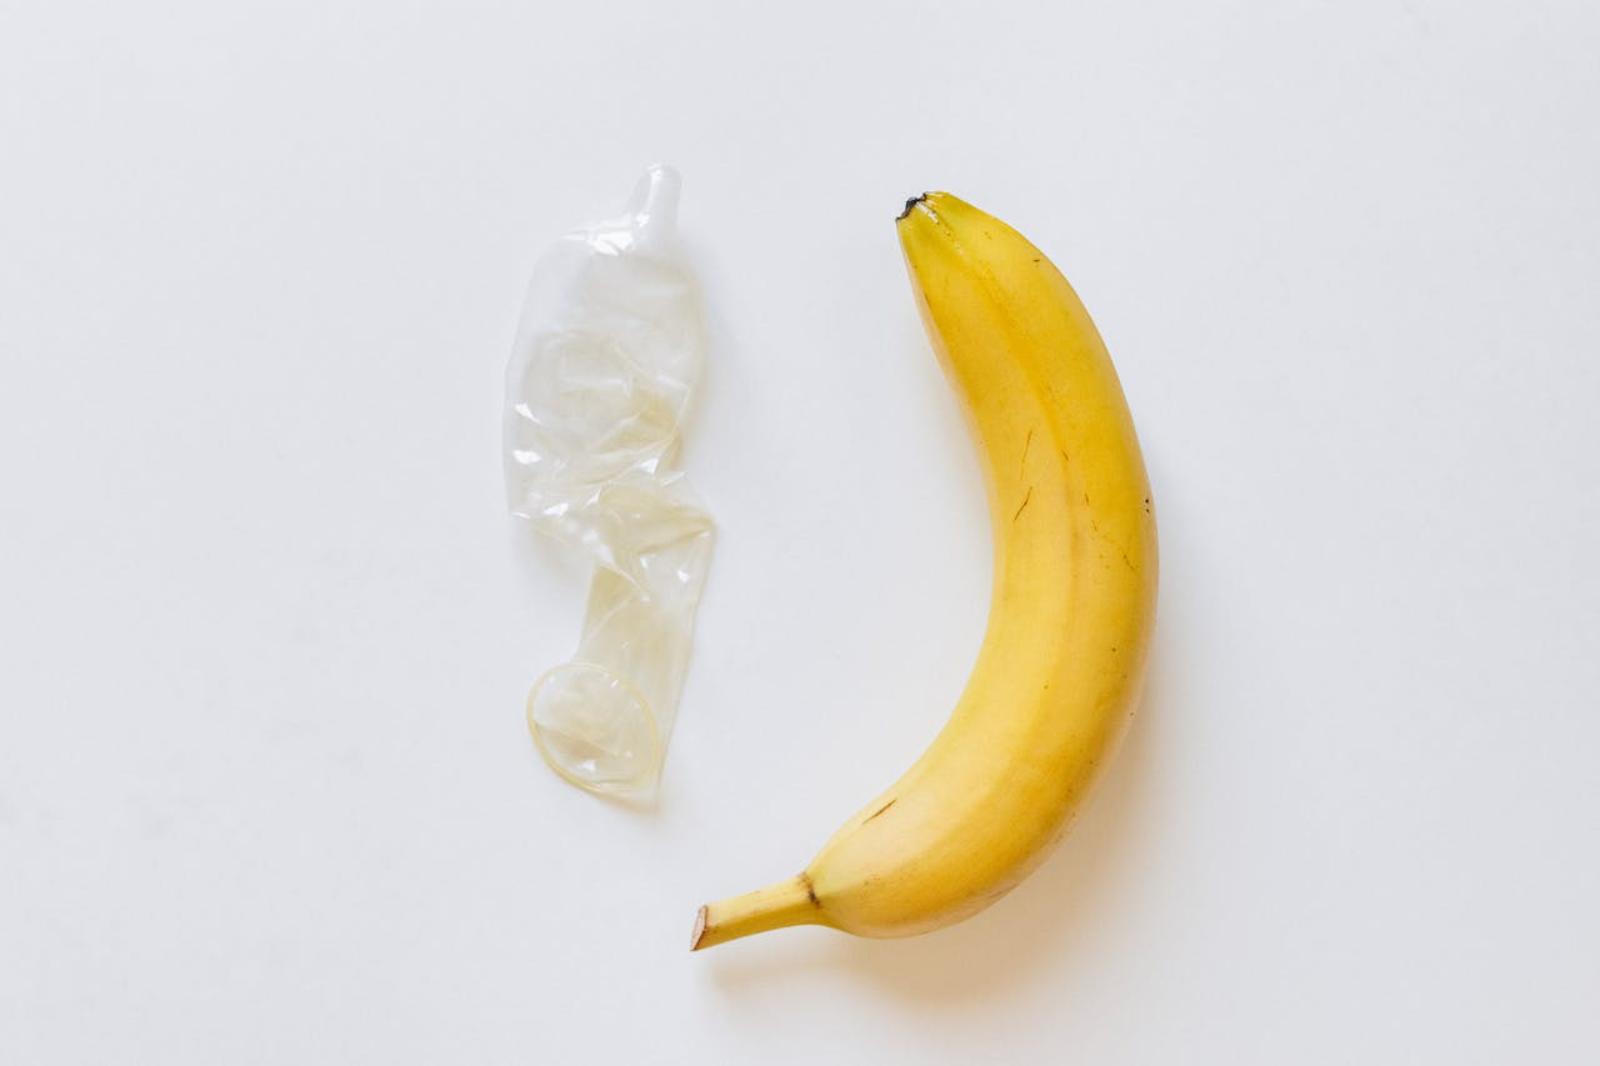 Photo of a banana and condom